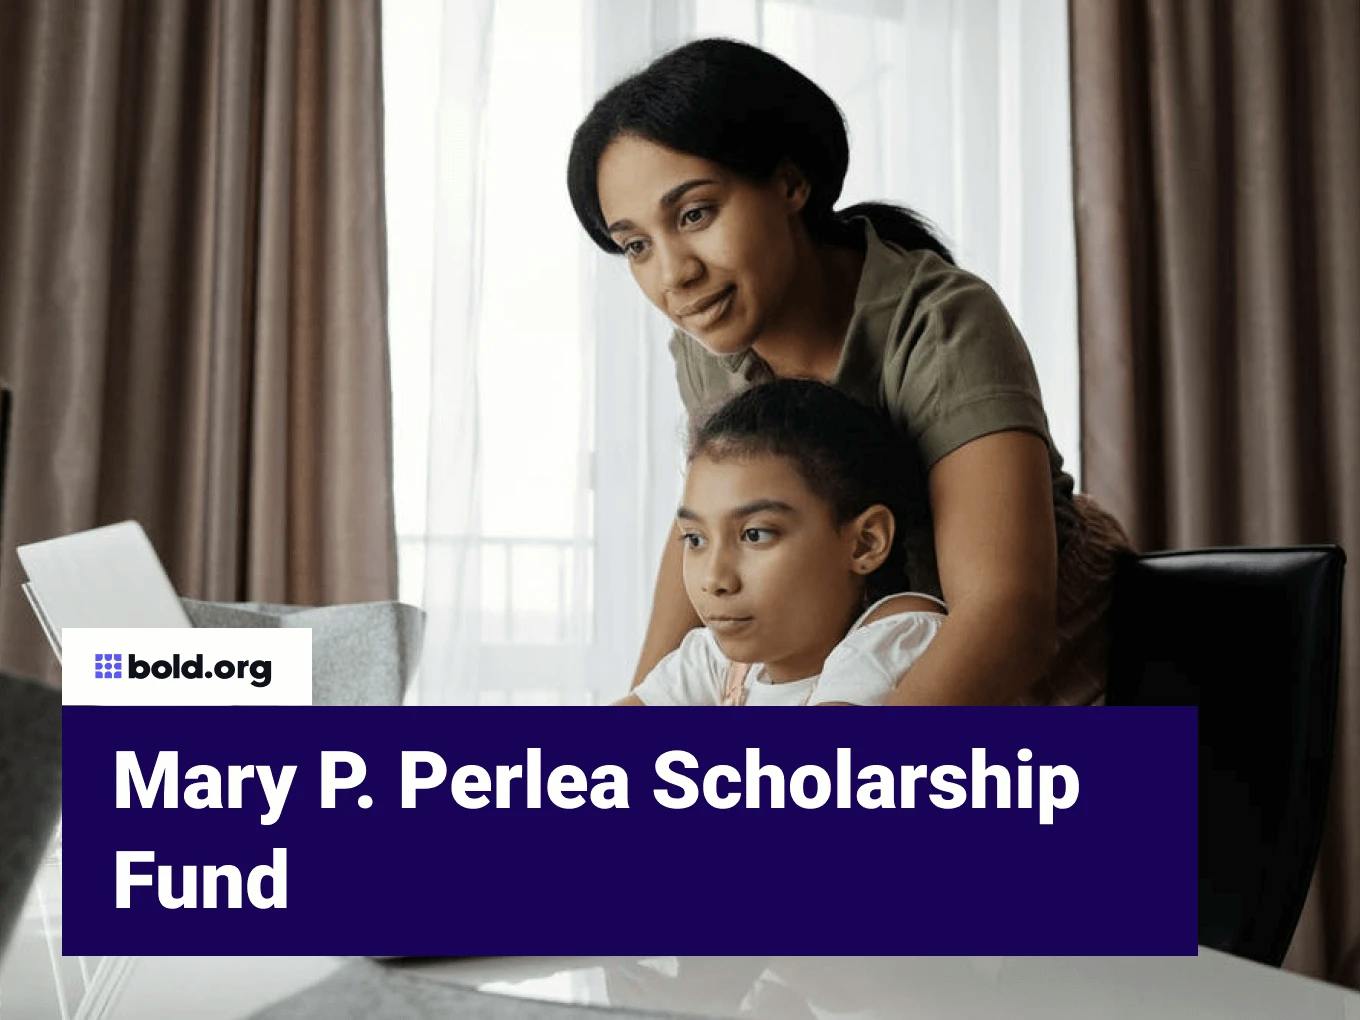 Mary P. Perlea Scholarship Fund